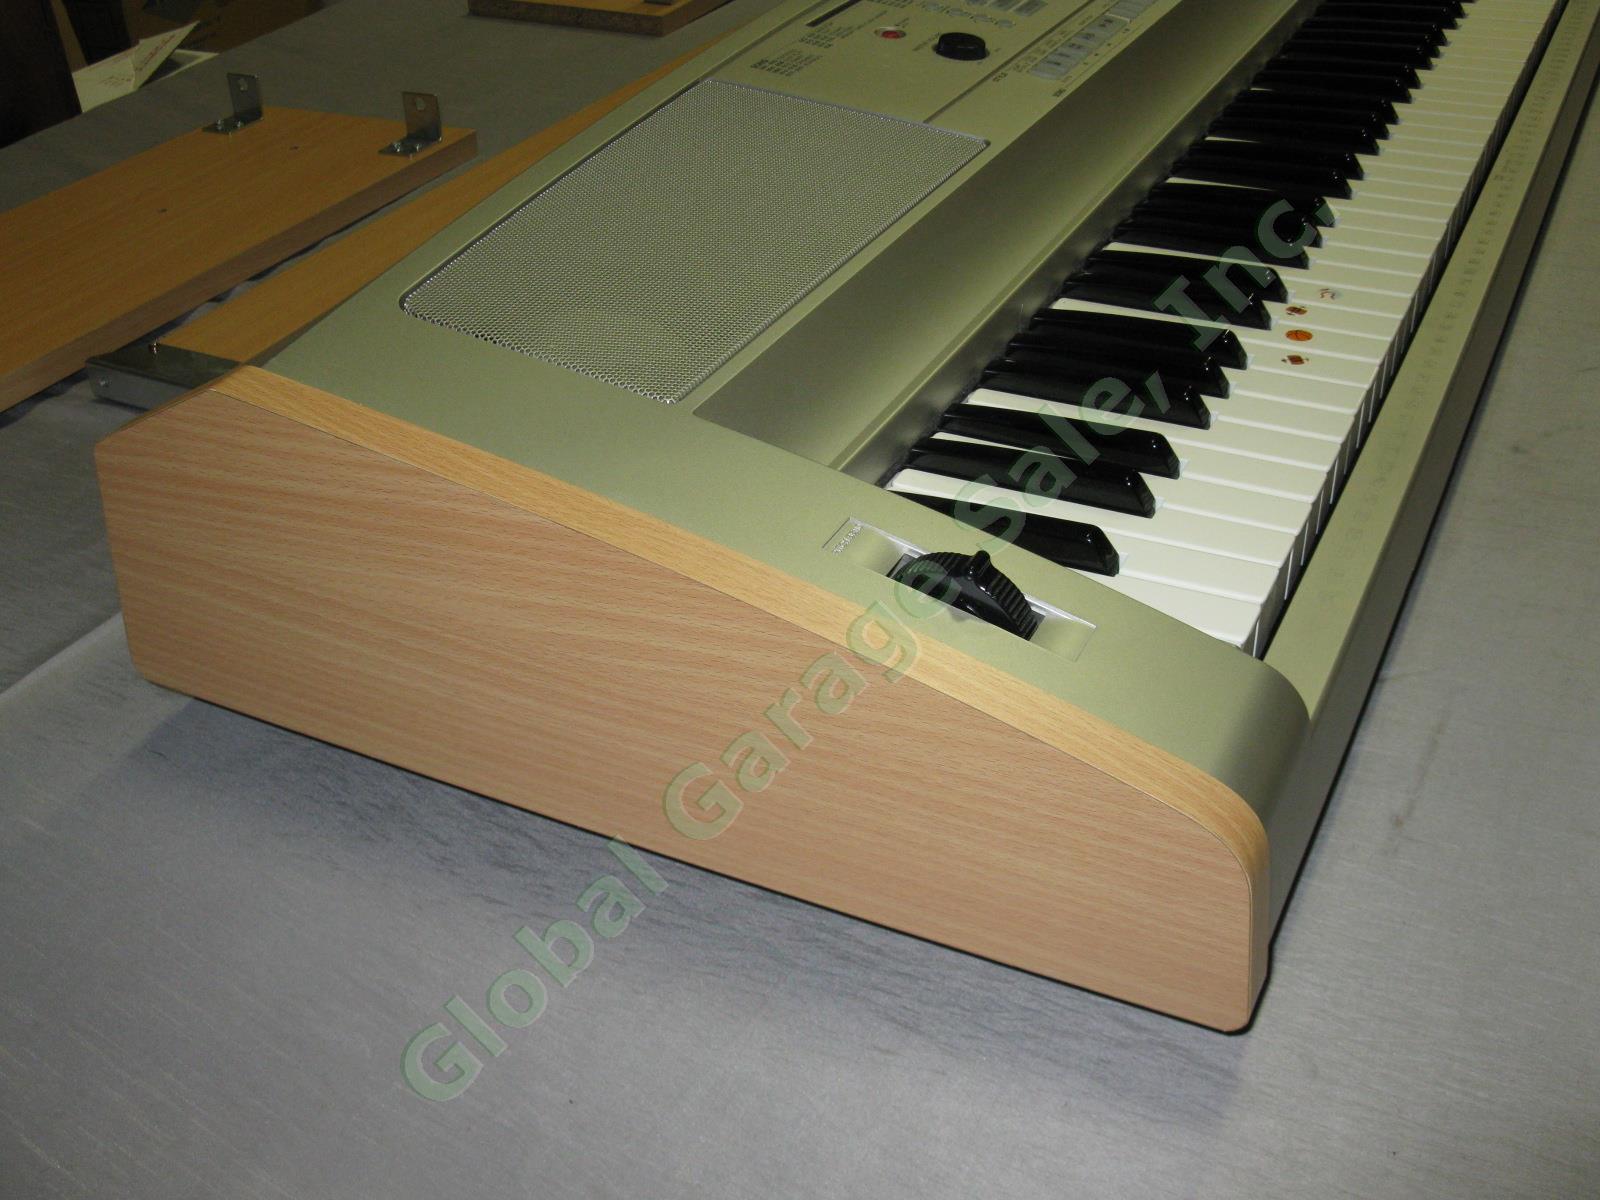 PICKUP ONLY Yamaha DGX-505 Portable Grand Piano Keyboard W/ Stand Power Supply + 8